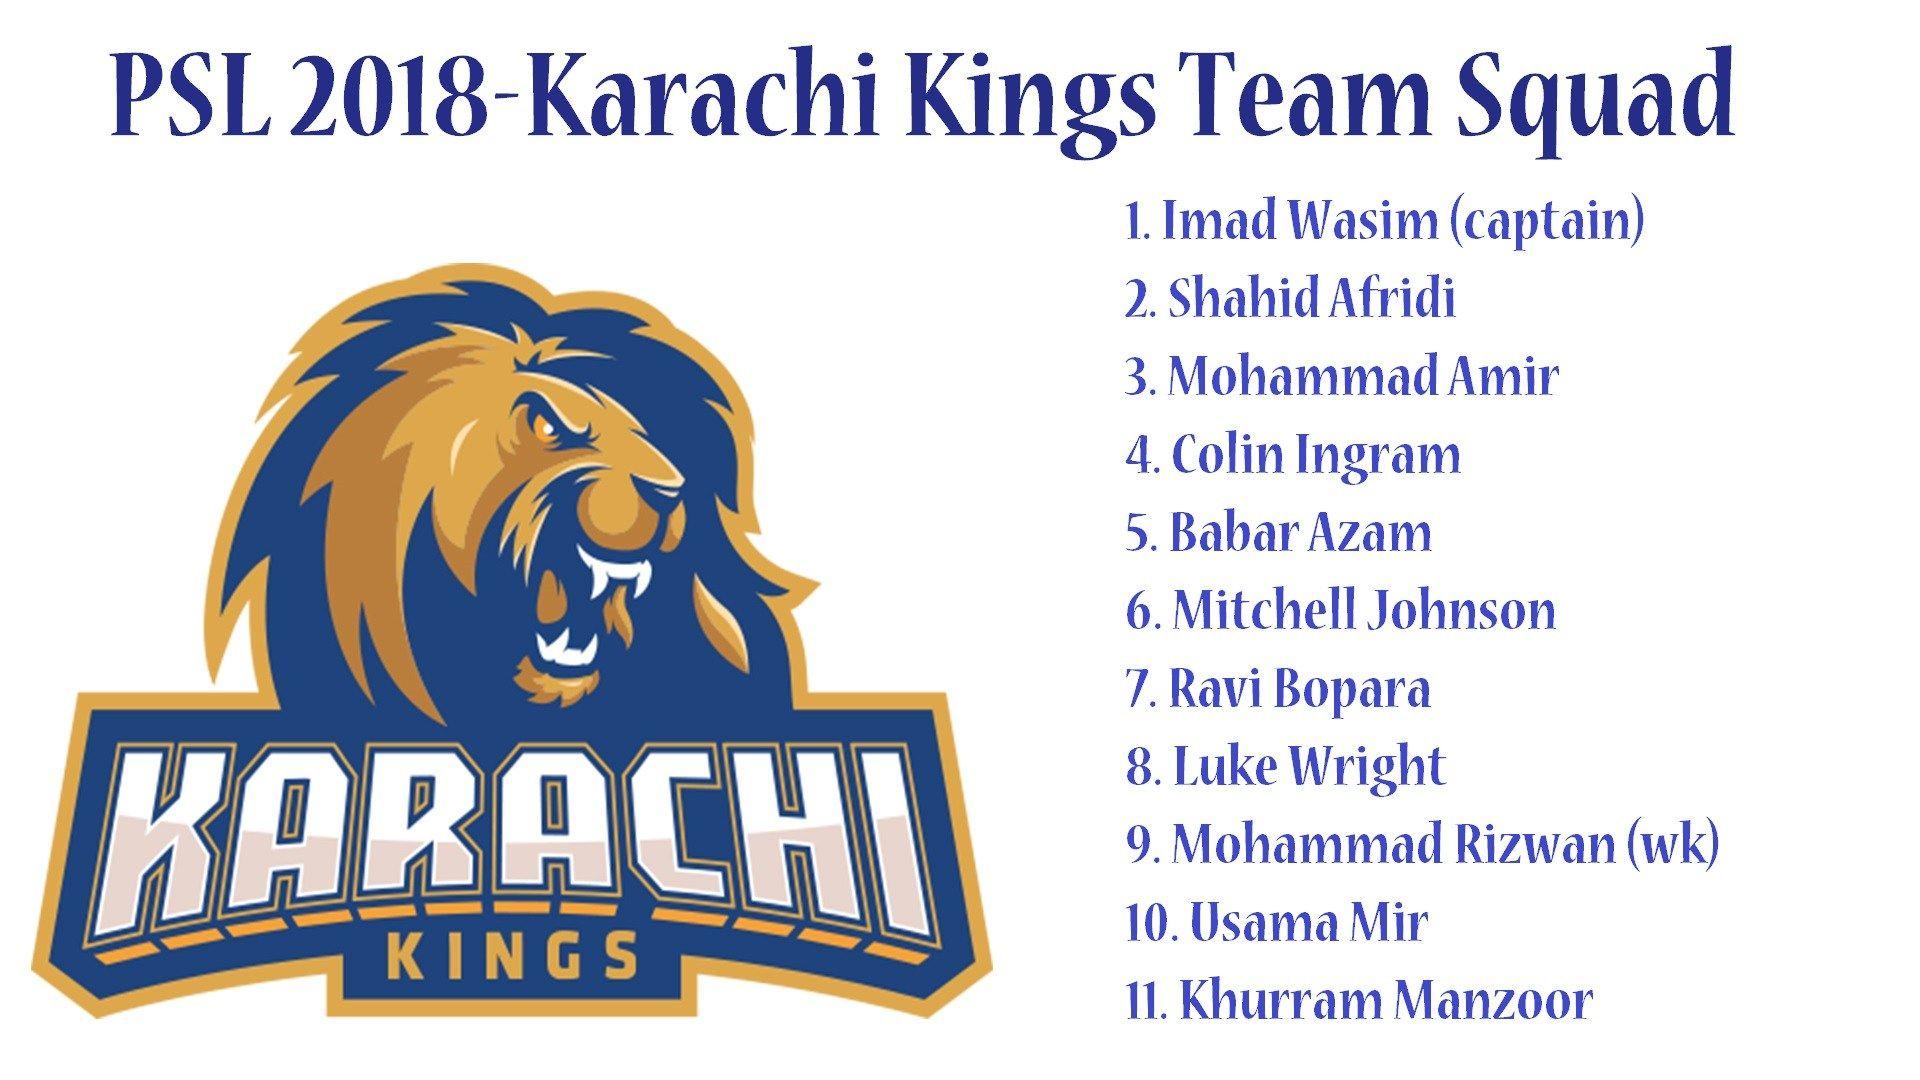 King Squad Logo - Karachi Kings Team Squad 2018 | Karachi Kings hd Logo Wallpaper